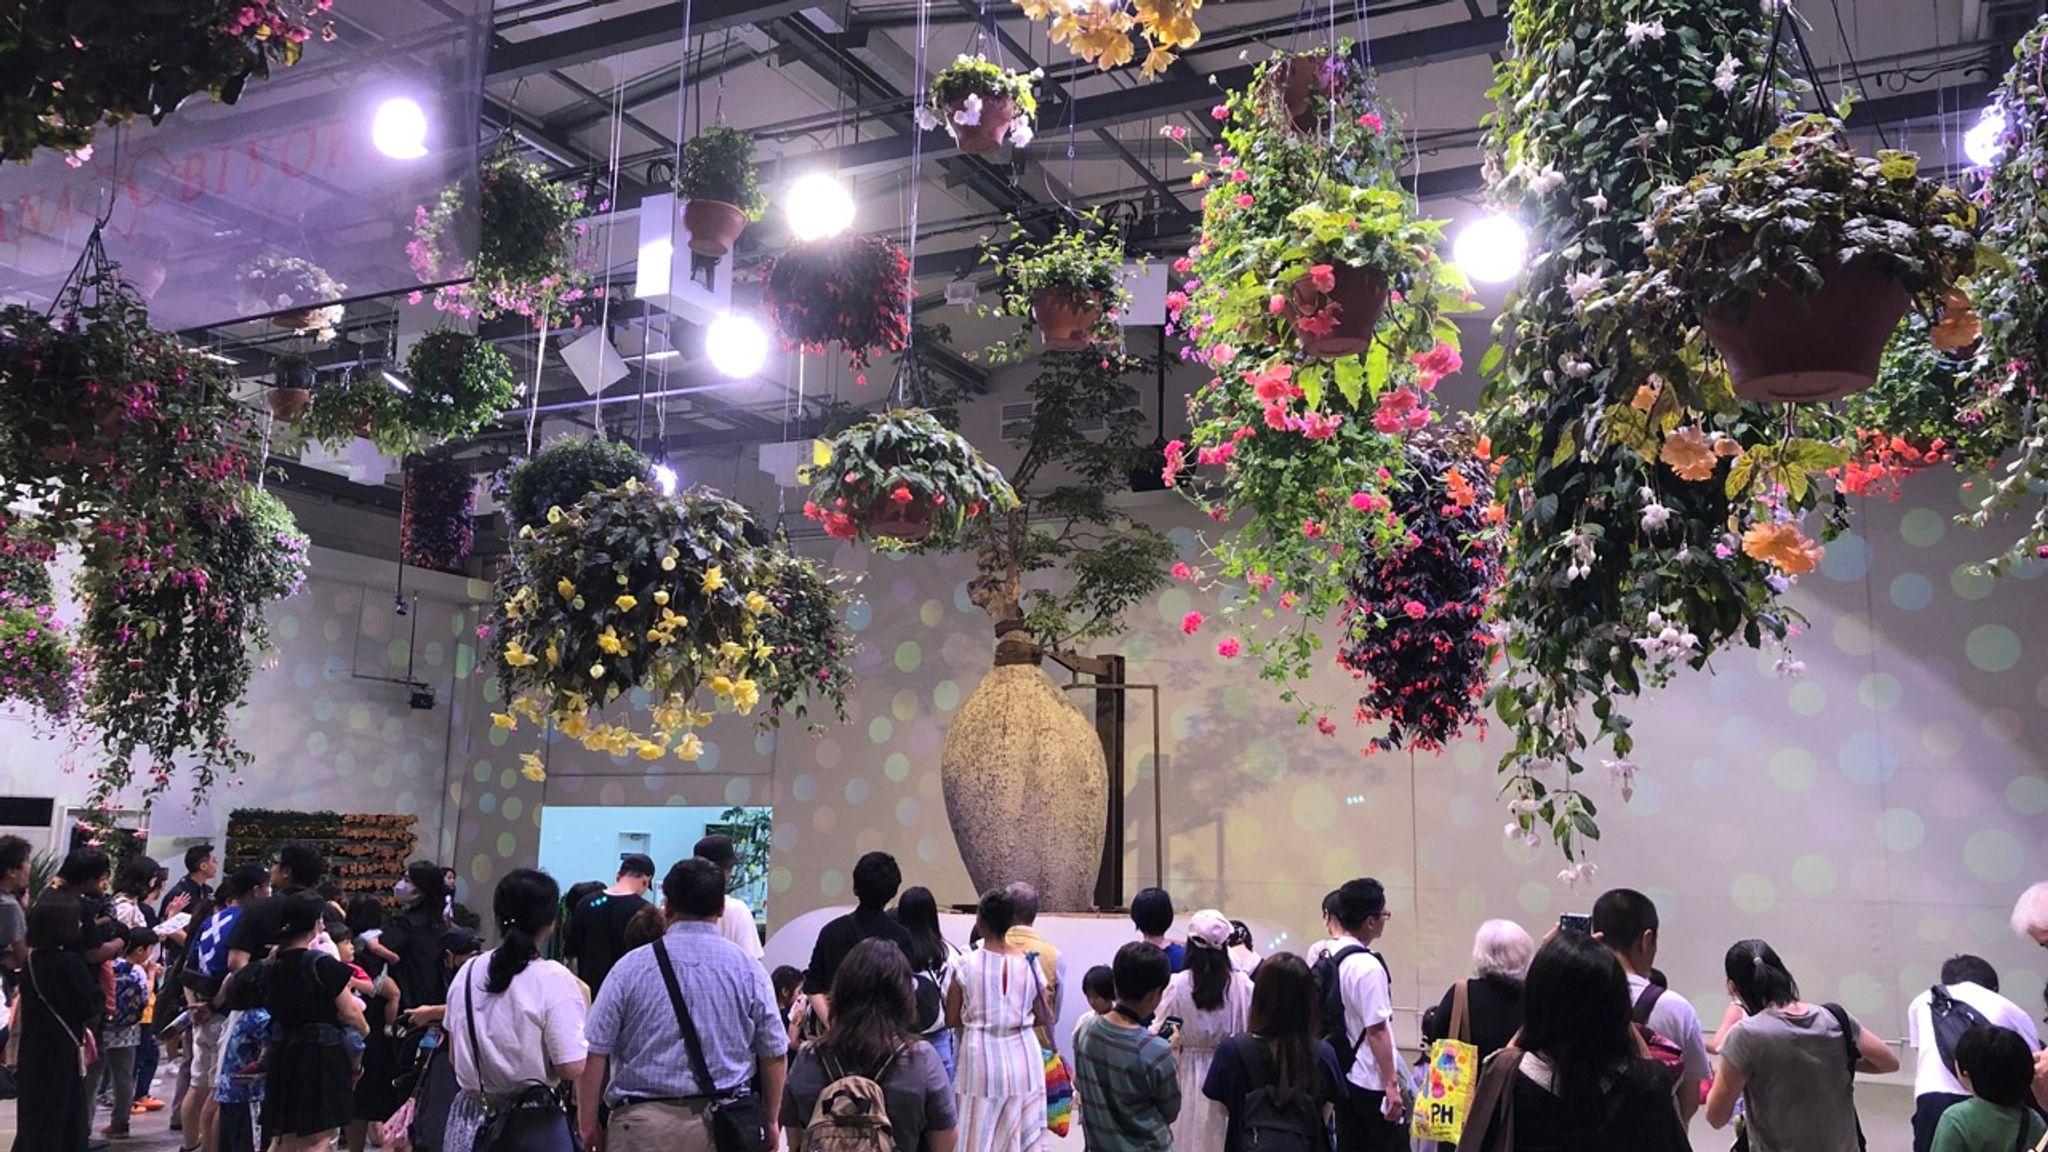 Flowers and Digital Art Show at Hana-Biyori